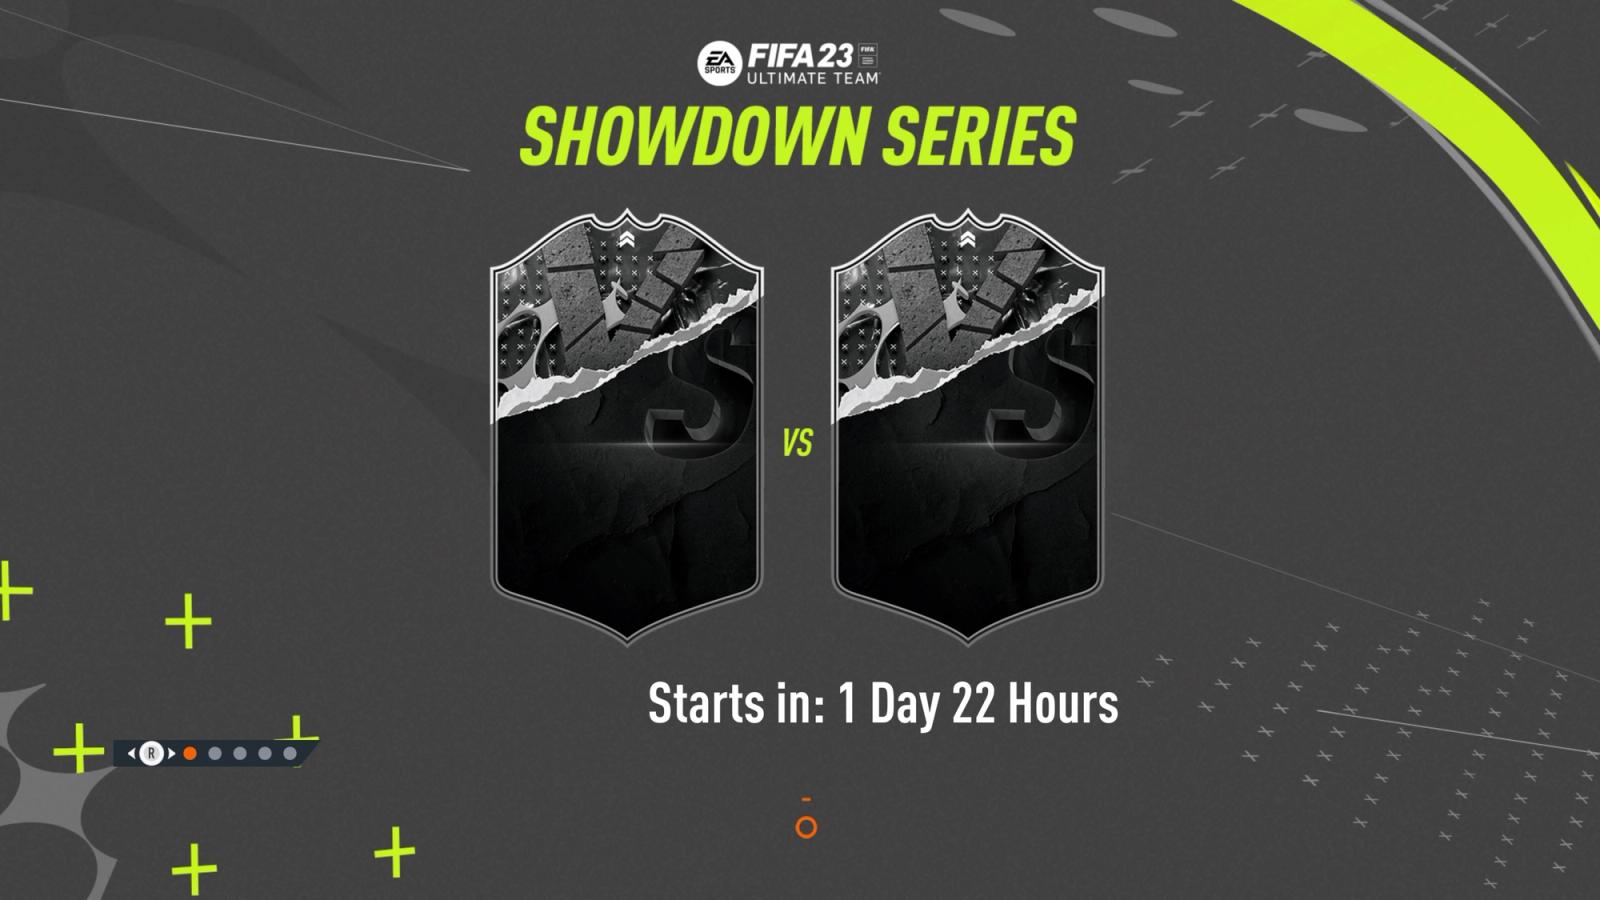 fifa-23-showdown-series